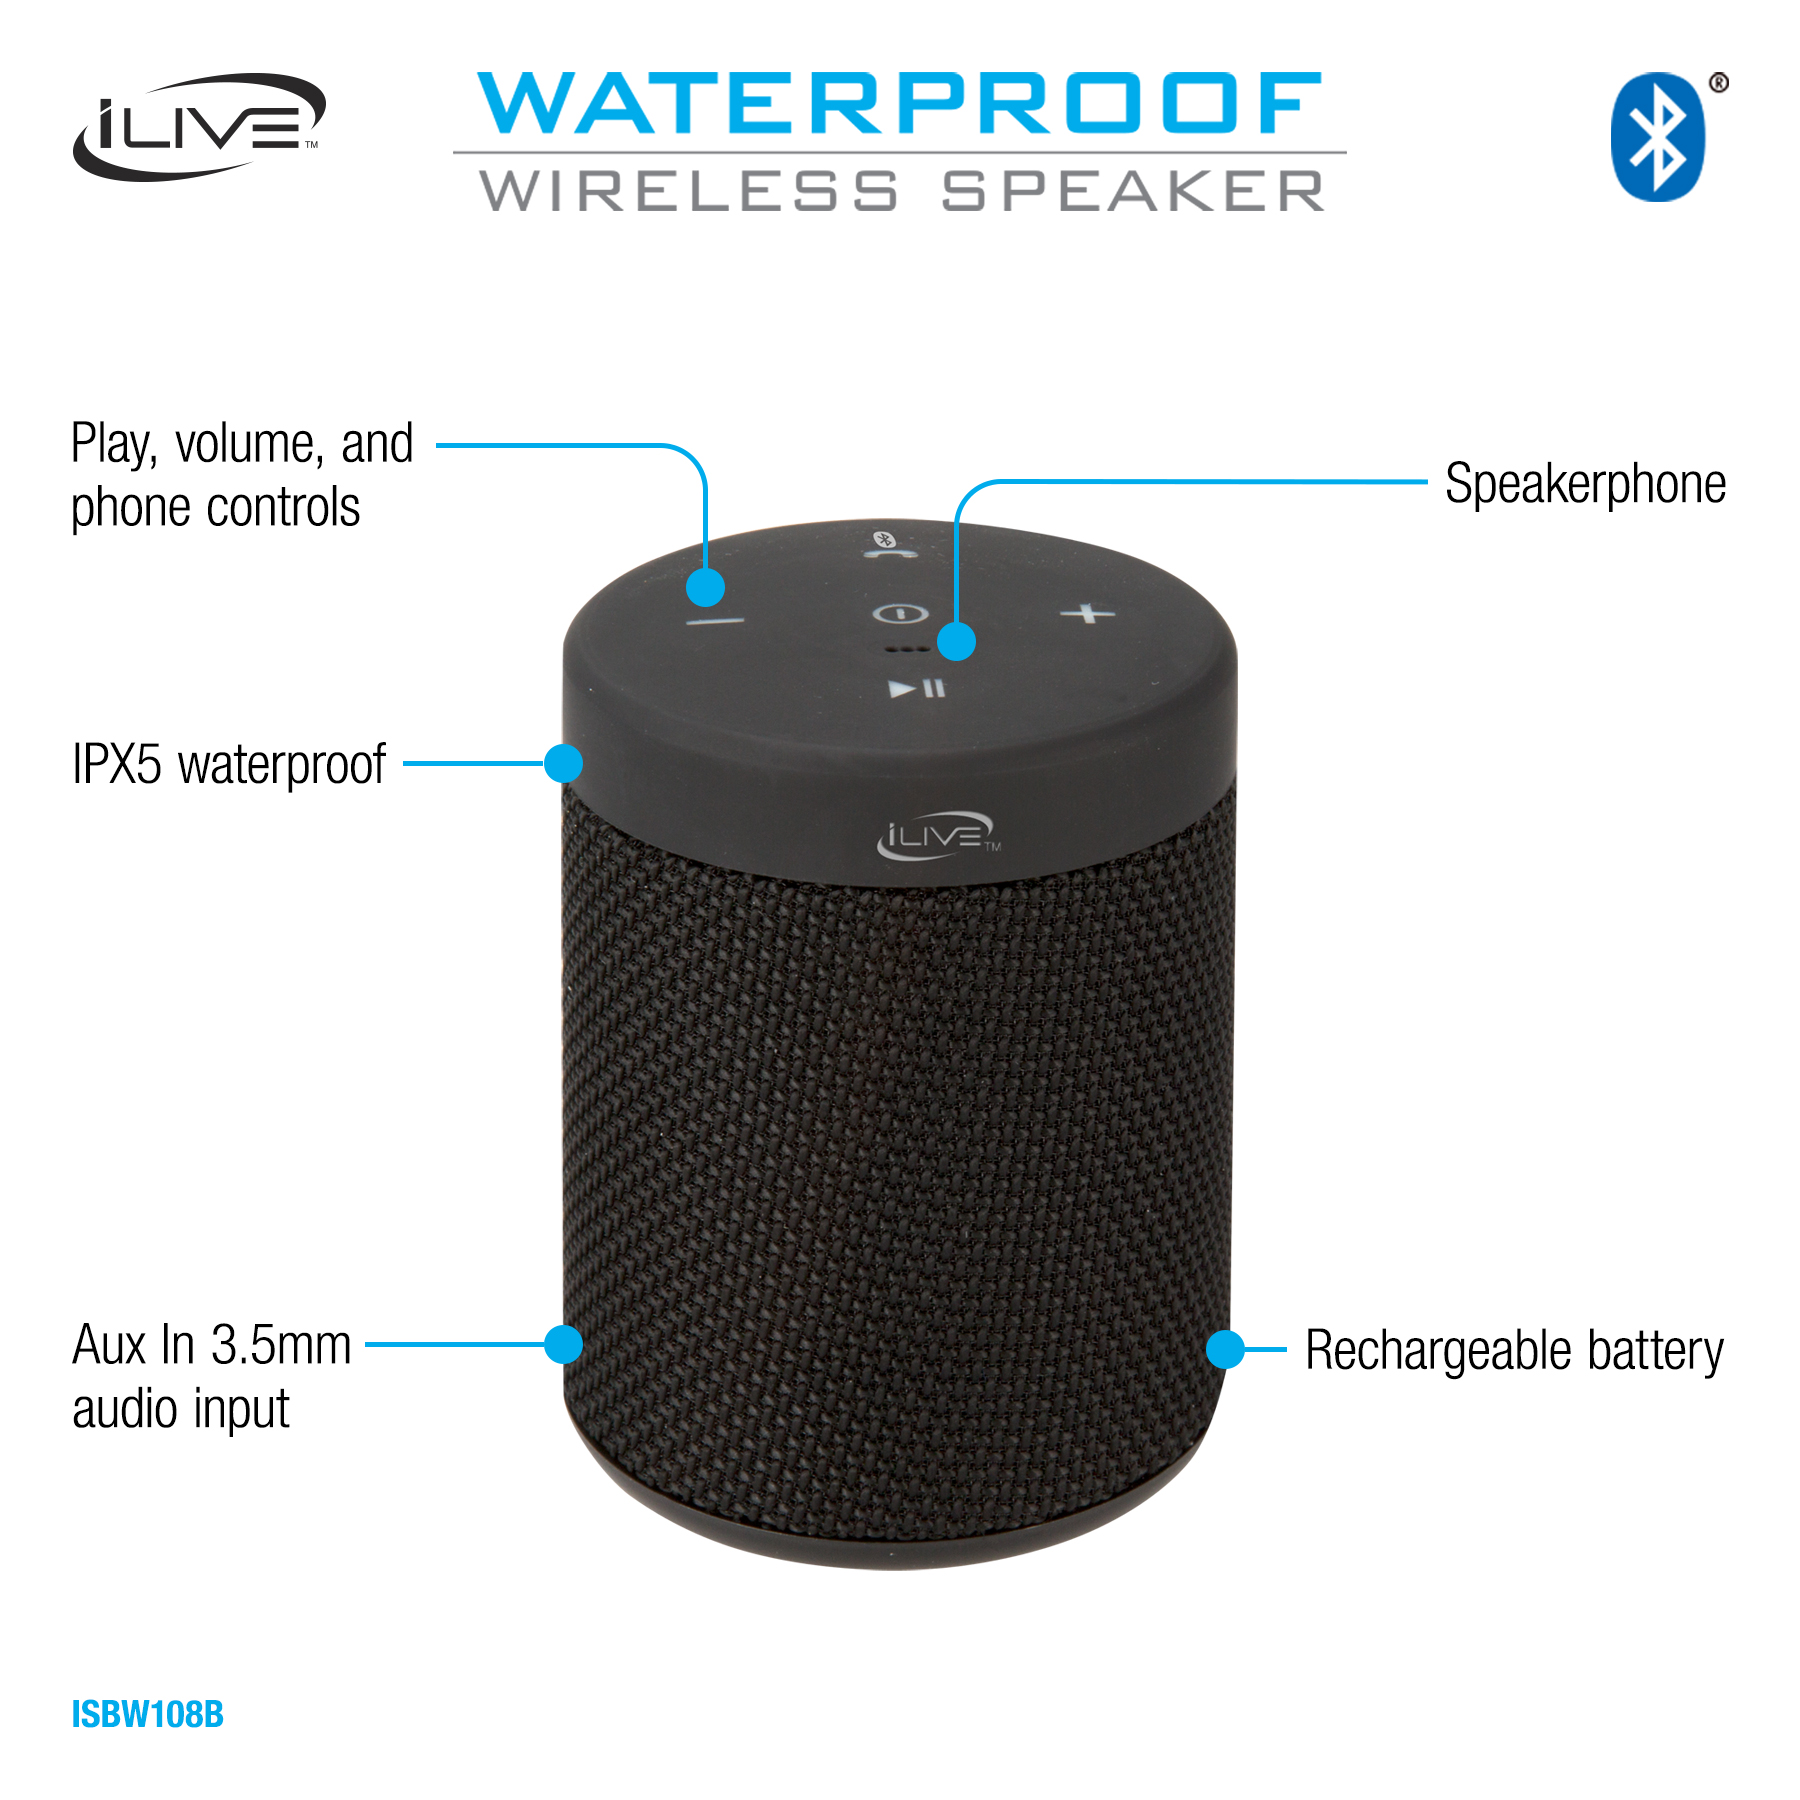 iLive ISBW108 Waterproof Fabric Wireless Bluetooth Speaker - Black - image 3 of 12